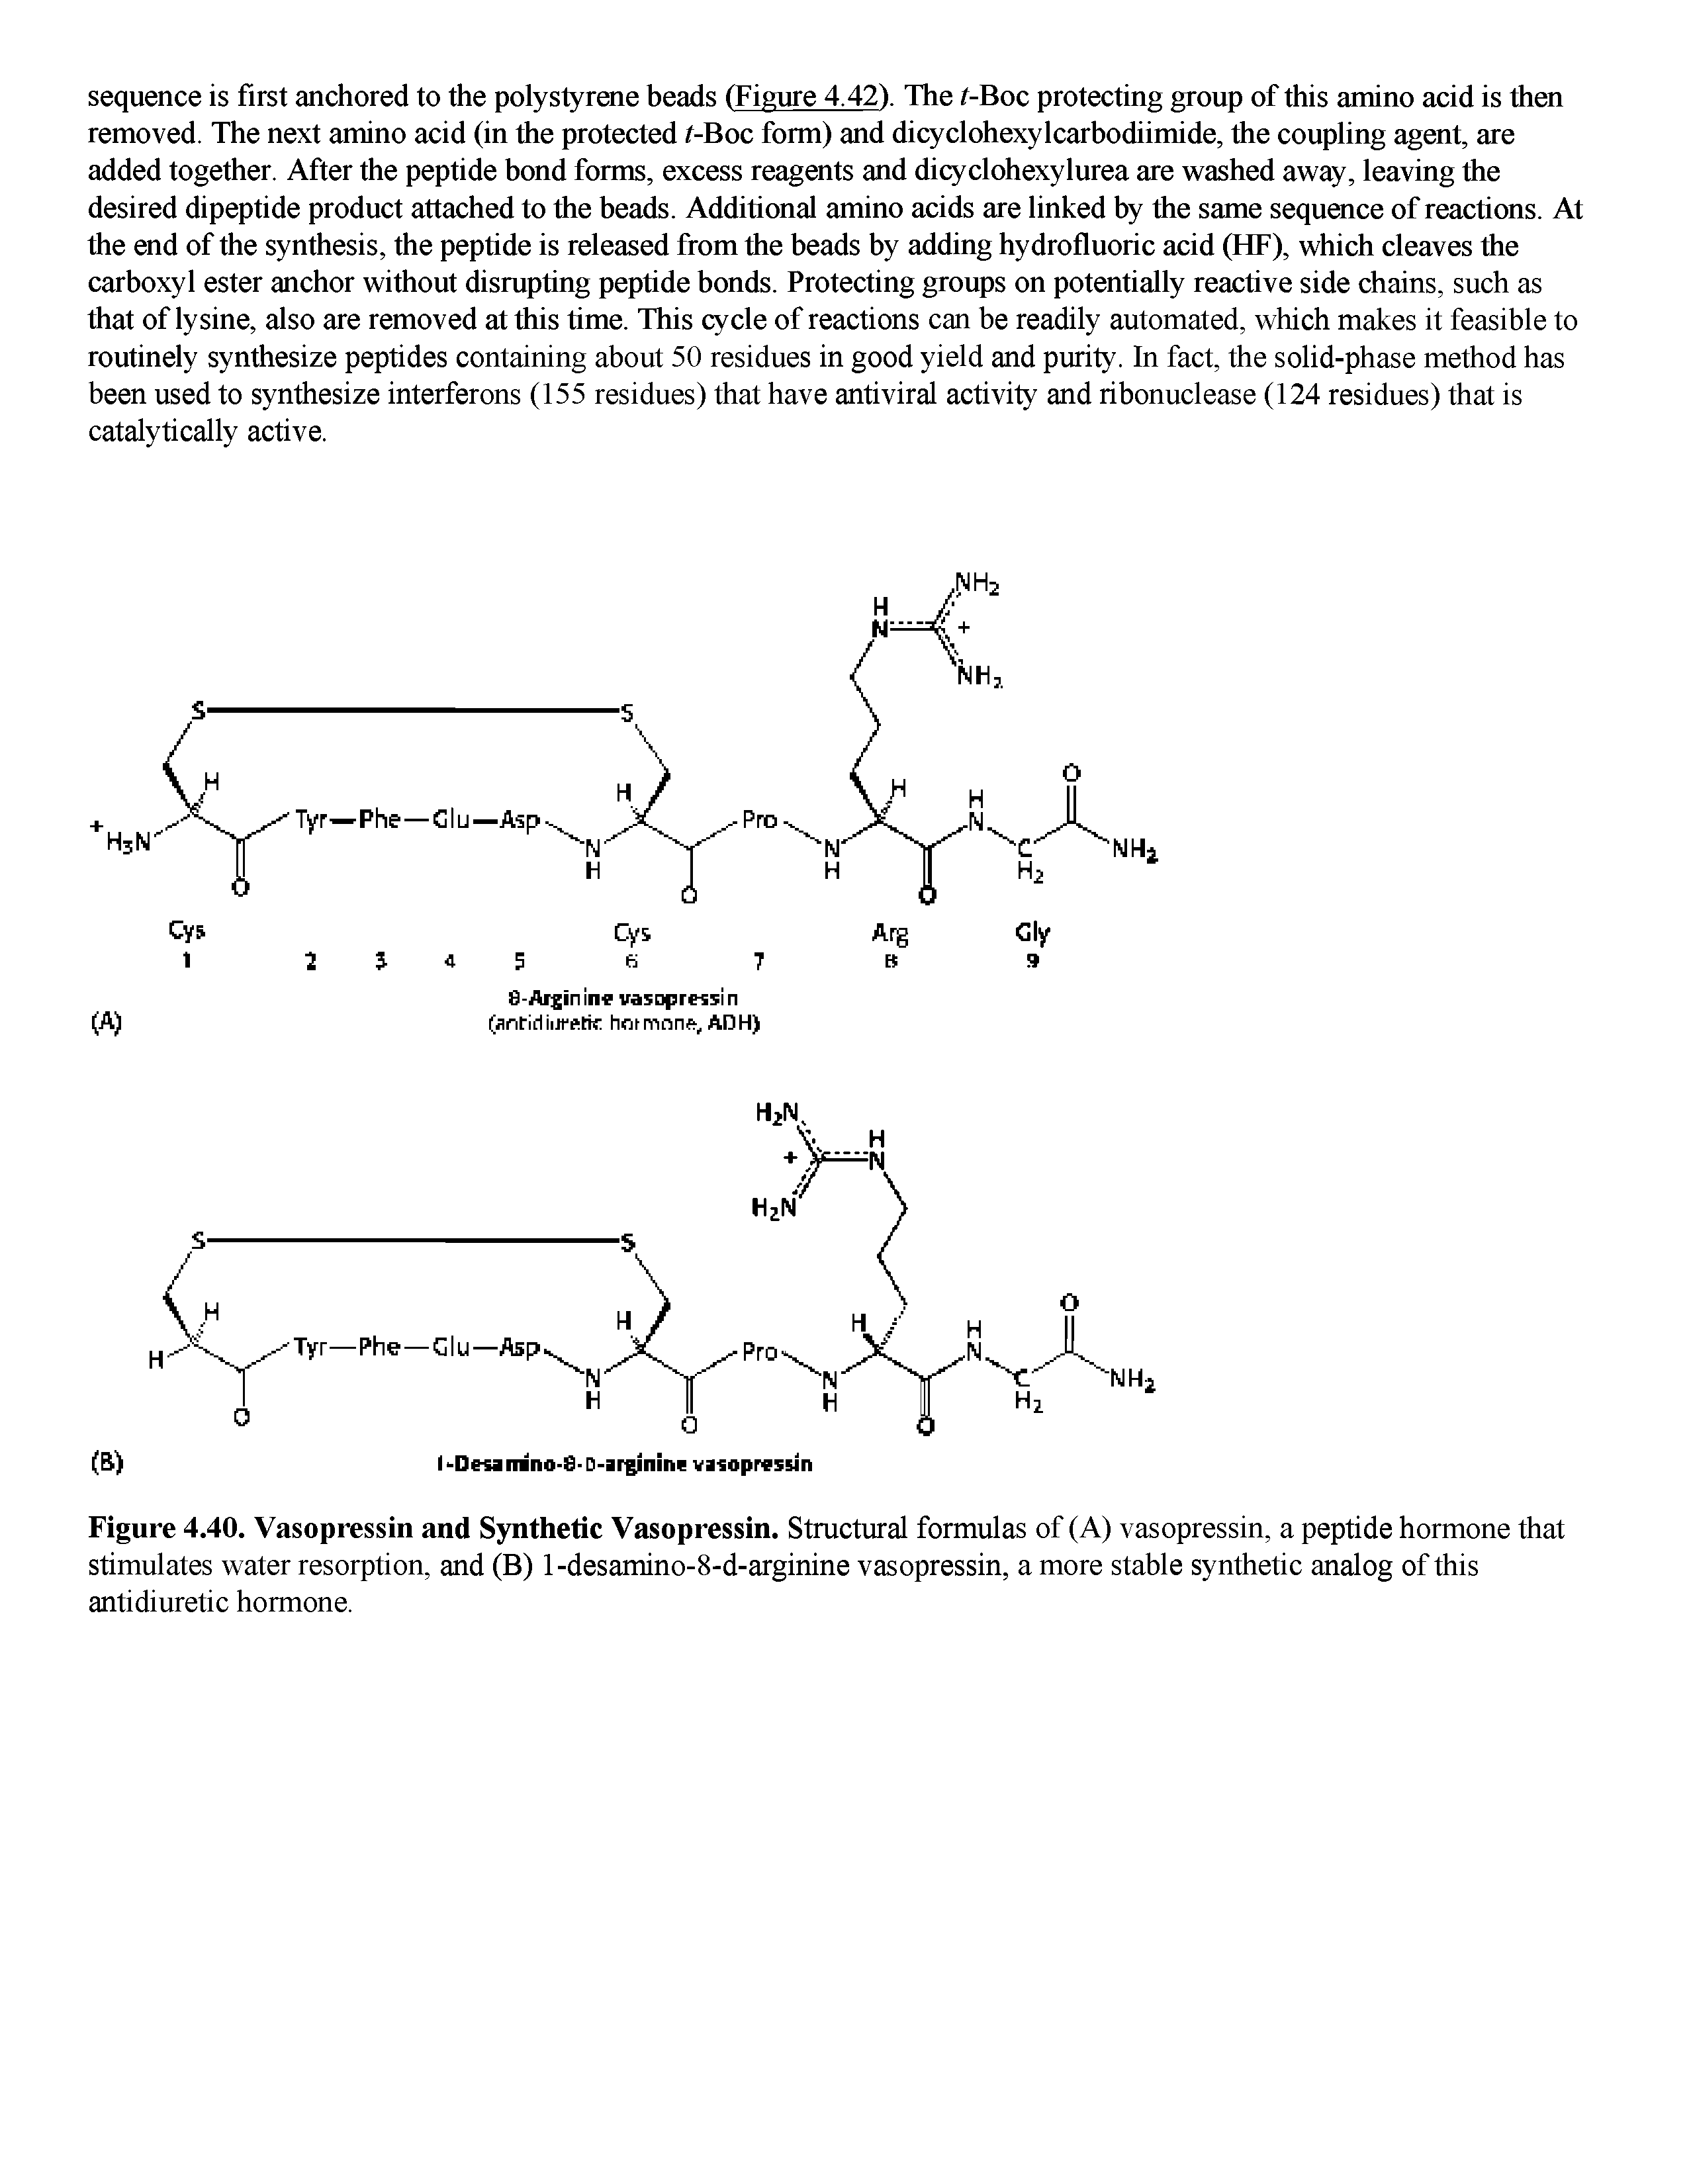 Figure 4.40. Vasopressin and Synthetic Vasopressin. Structural formulas of (A) vasopressin, a peptide hormone that stimulates water resorption, and (B) l-desamino-8-d-arginine vasopressin, a more stable synthetic analog of this antidiuretic hormone.